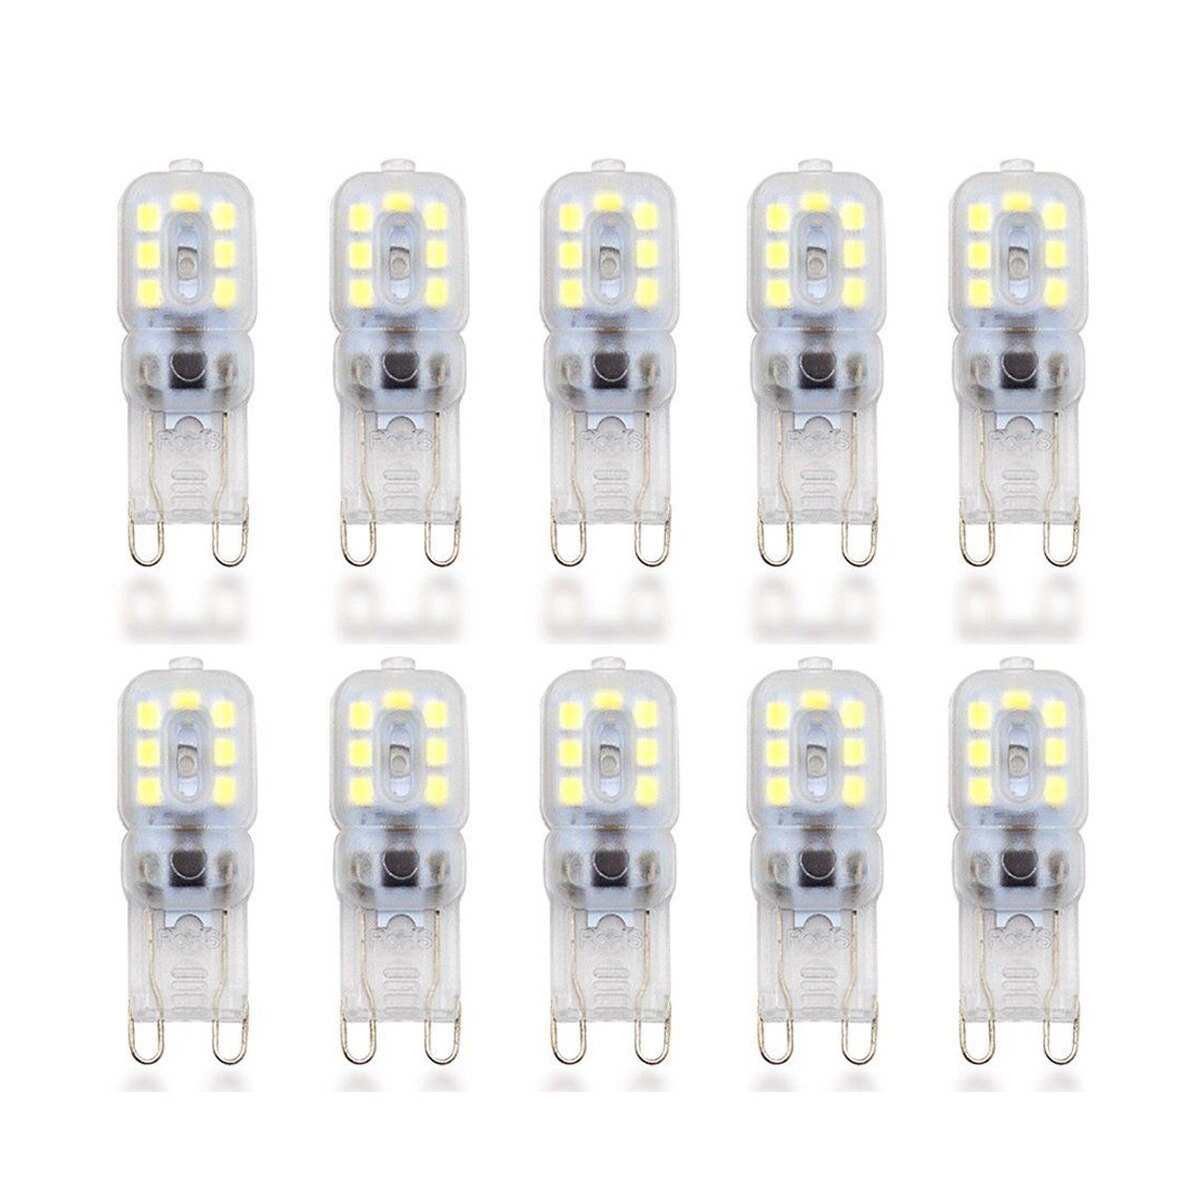 10 X G9 5W LED Dimbare Capsule Lamp Vervangen Licht Lampen AC220-240V, Warm wit 55*16mm